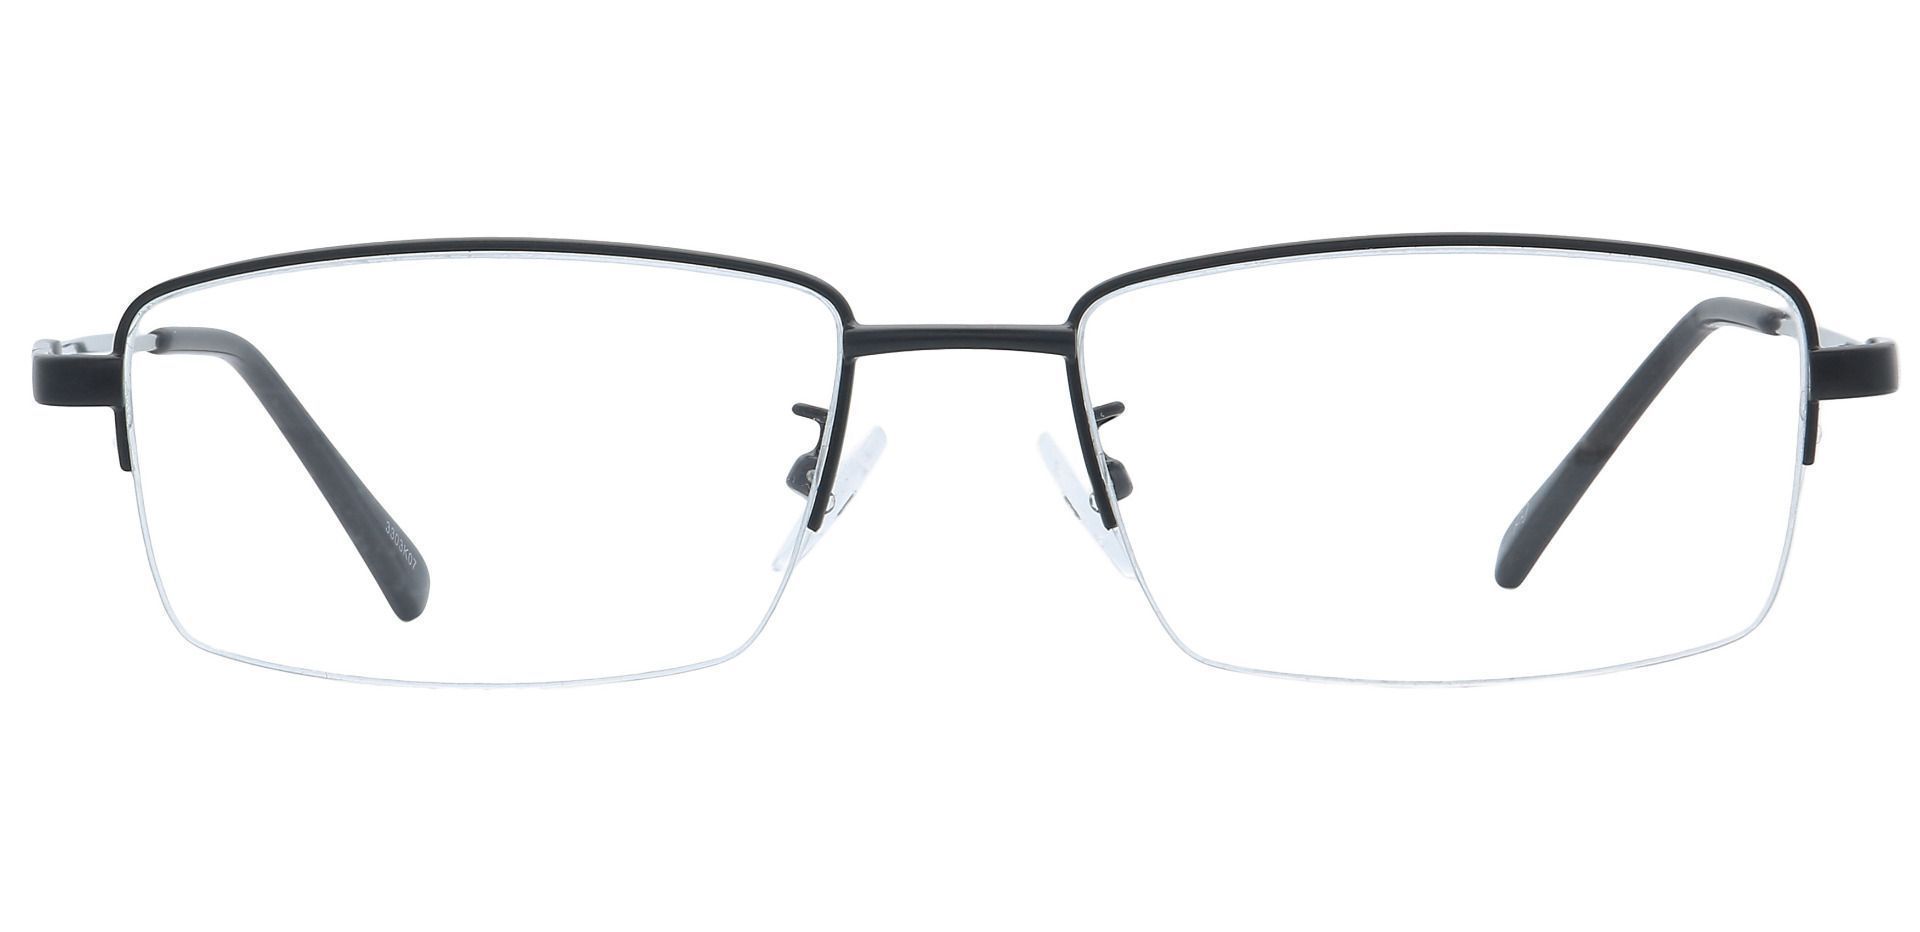 Zander Rectangle Lined Bifocal Glasses - Black